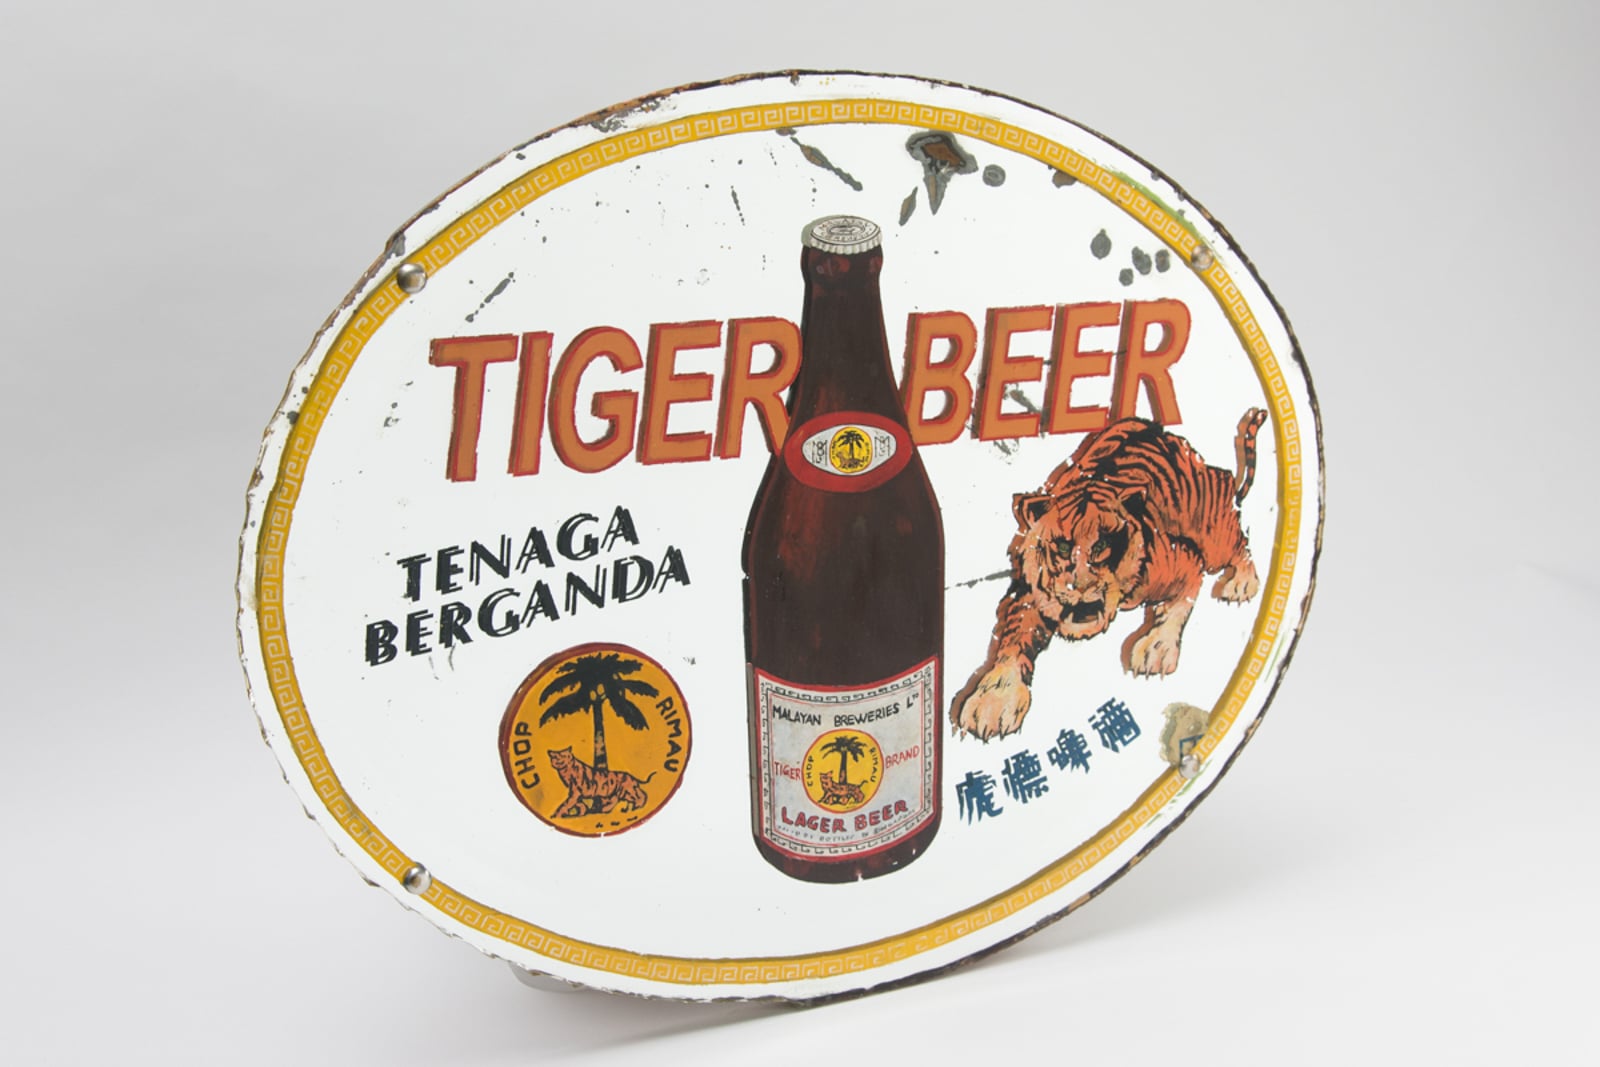 Tiger Beer Tenaga Berganda Mirror